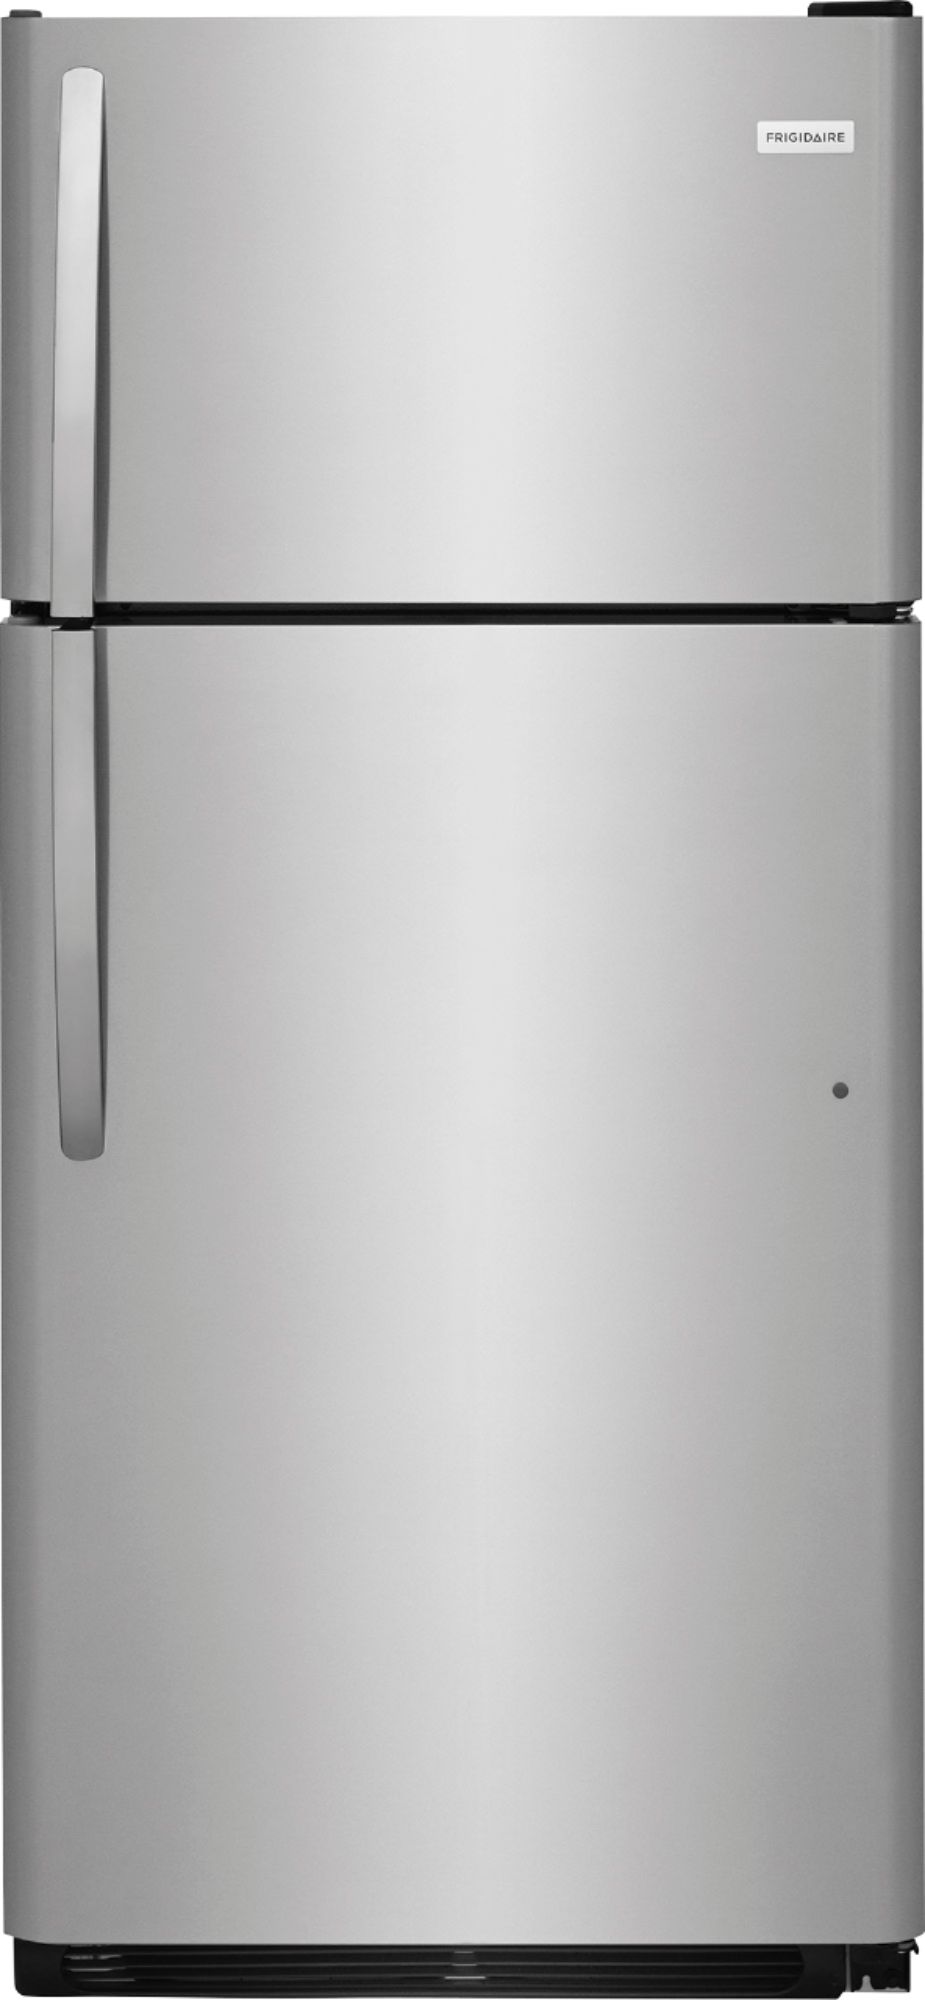 Frigidaire FFTR1821T Top-Freezer